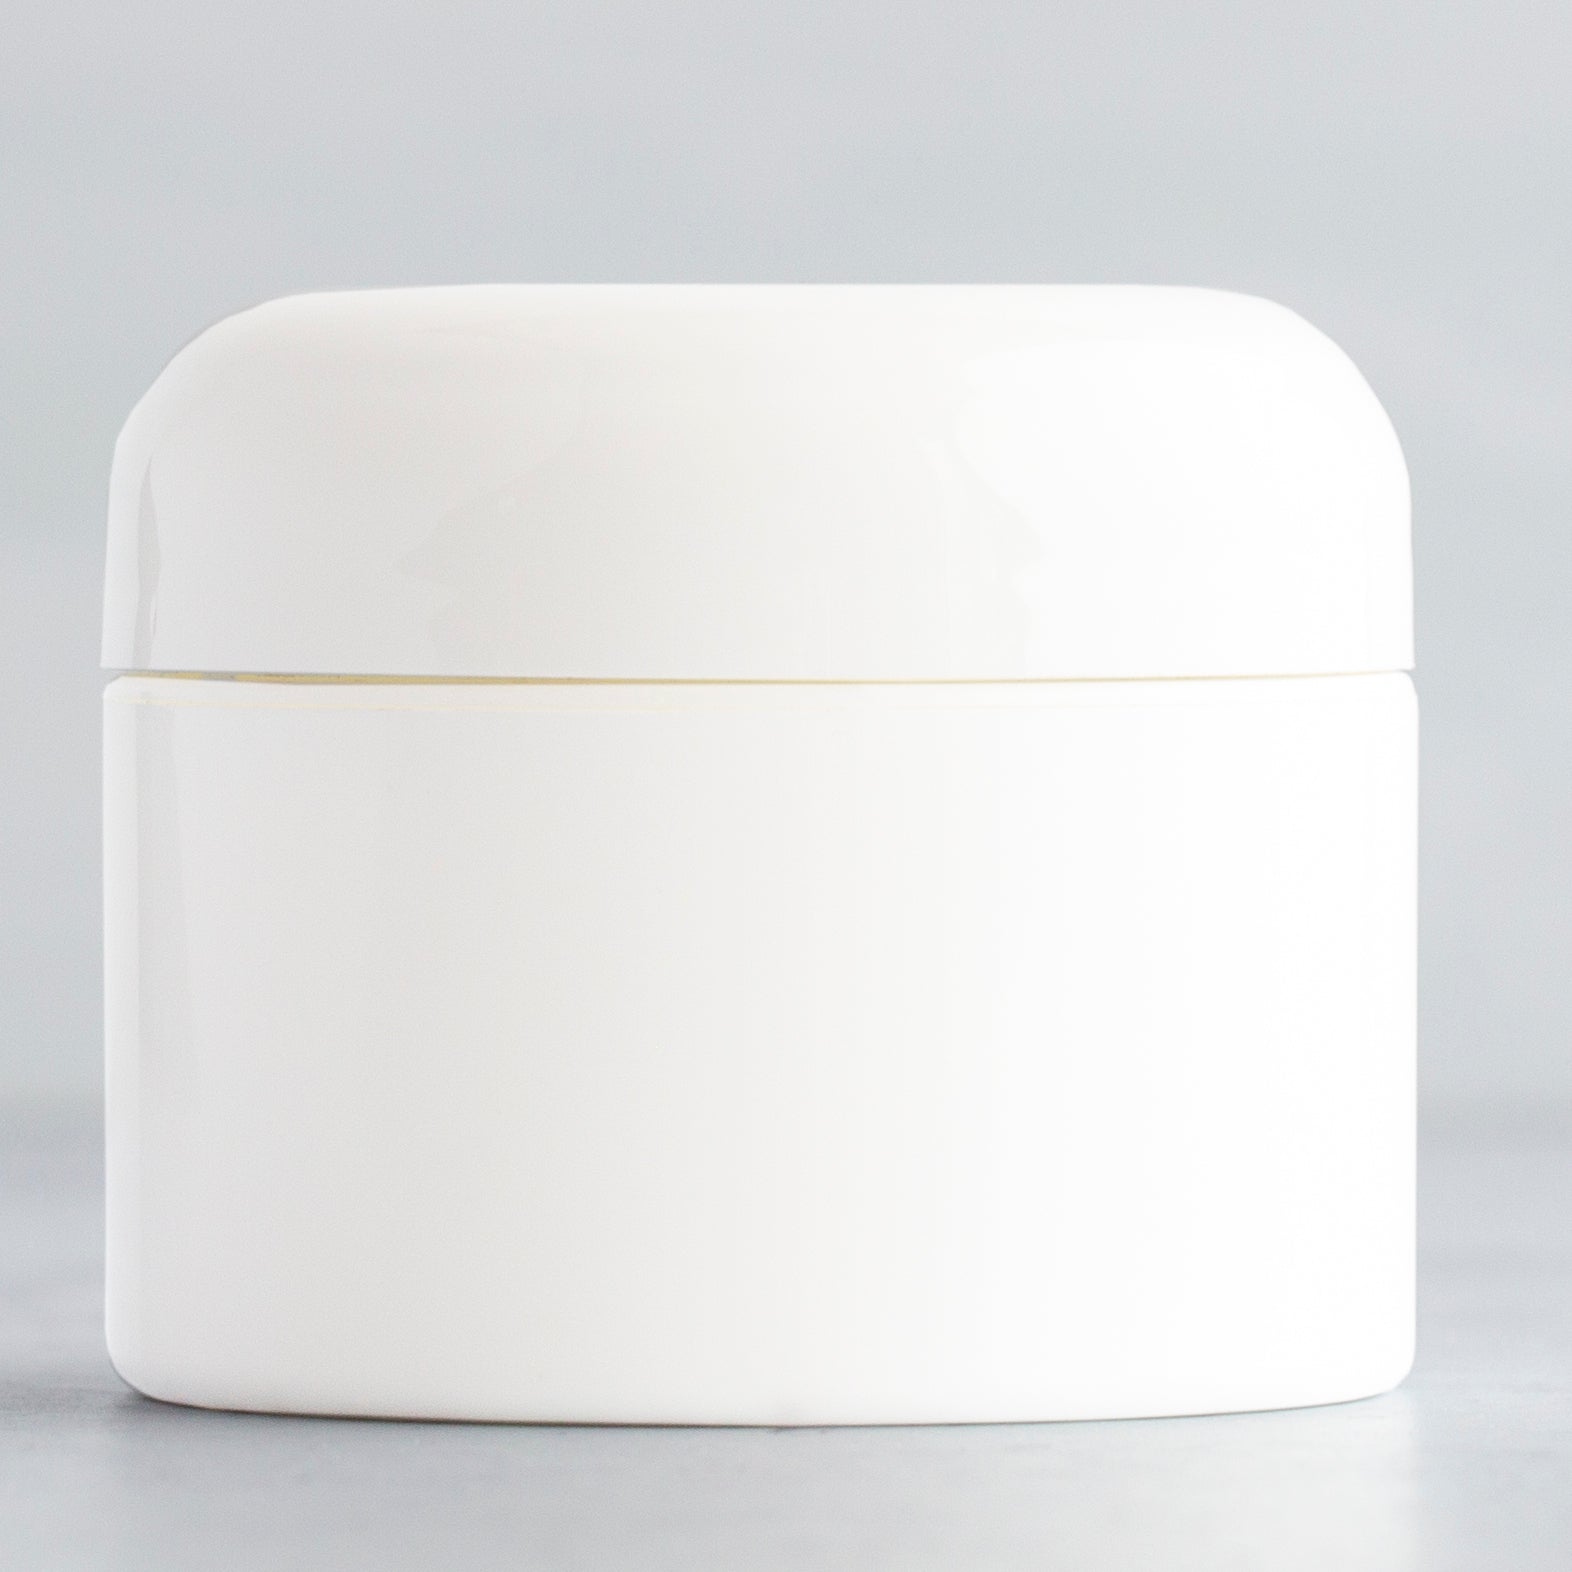 1 oz White Square Base Plastic Jar with White Dome Cap